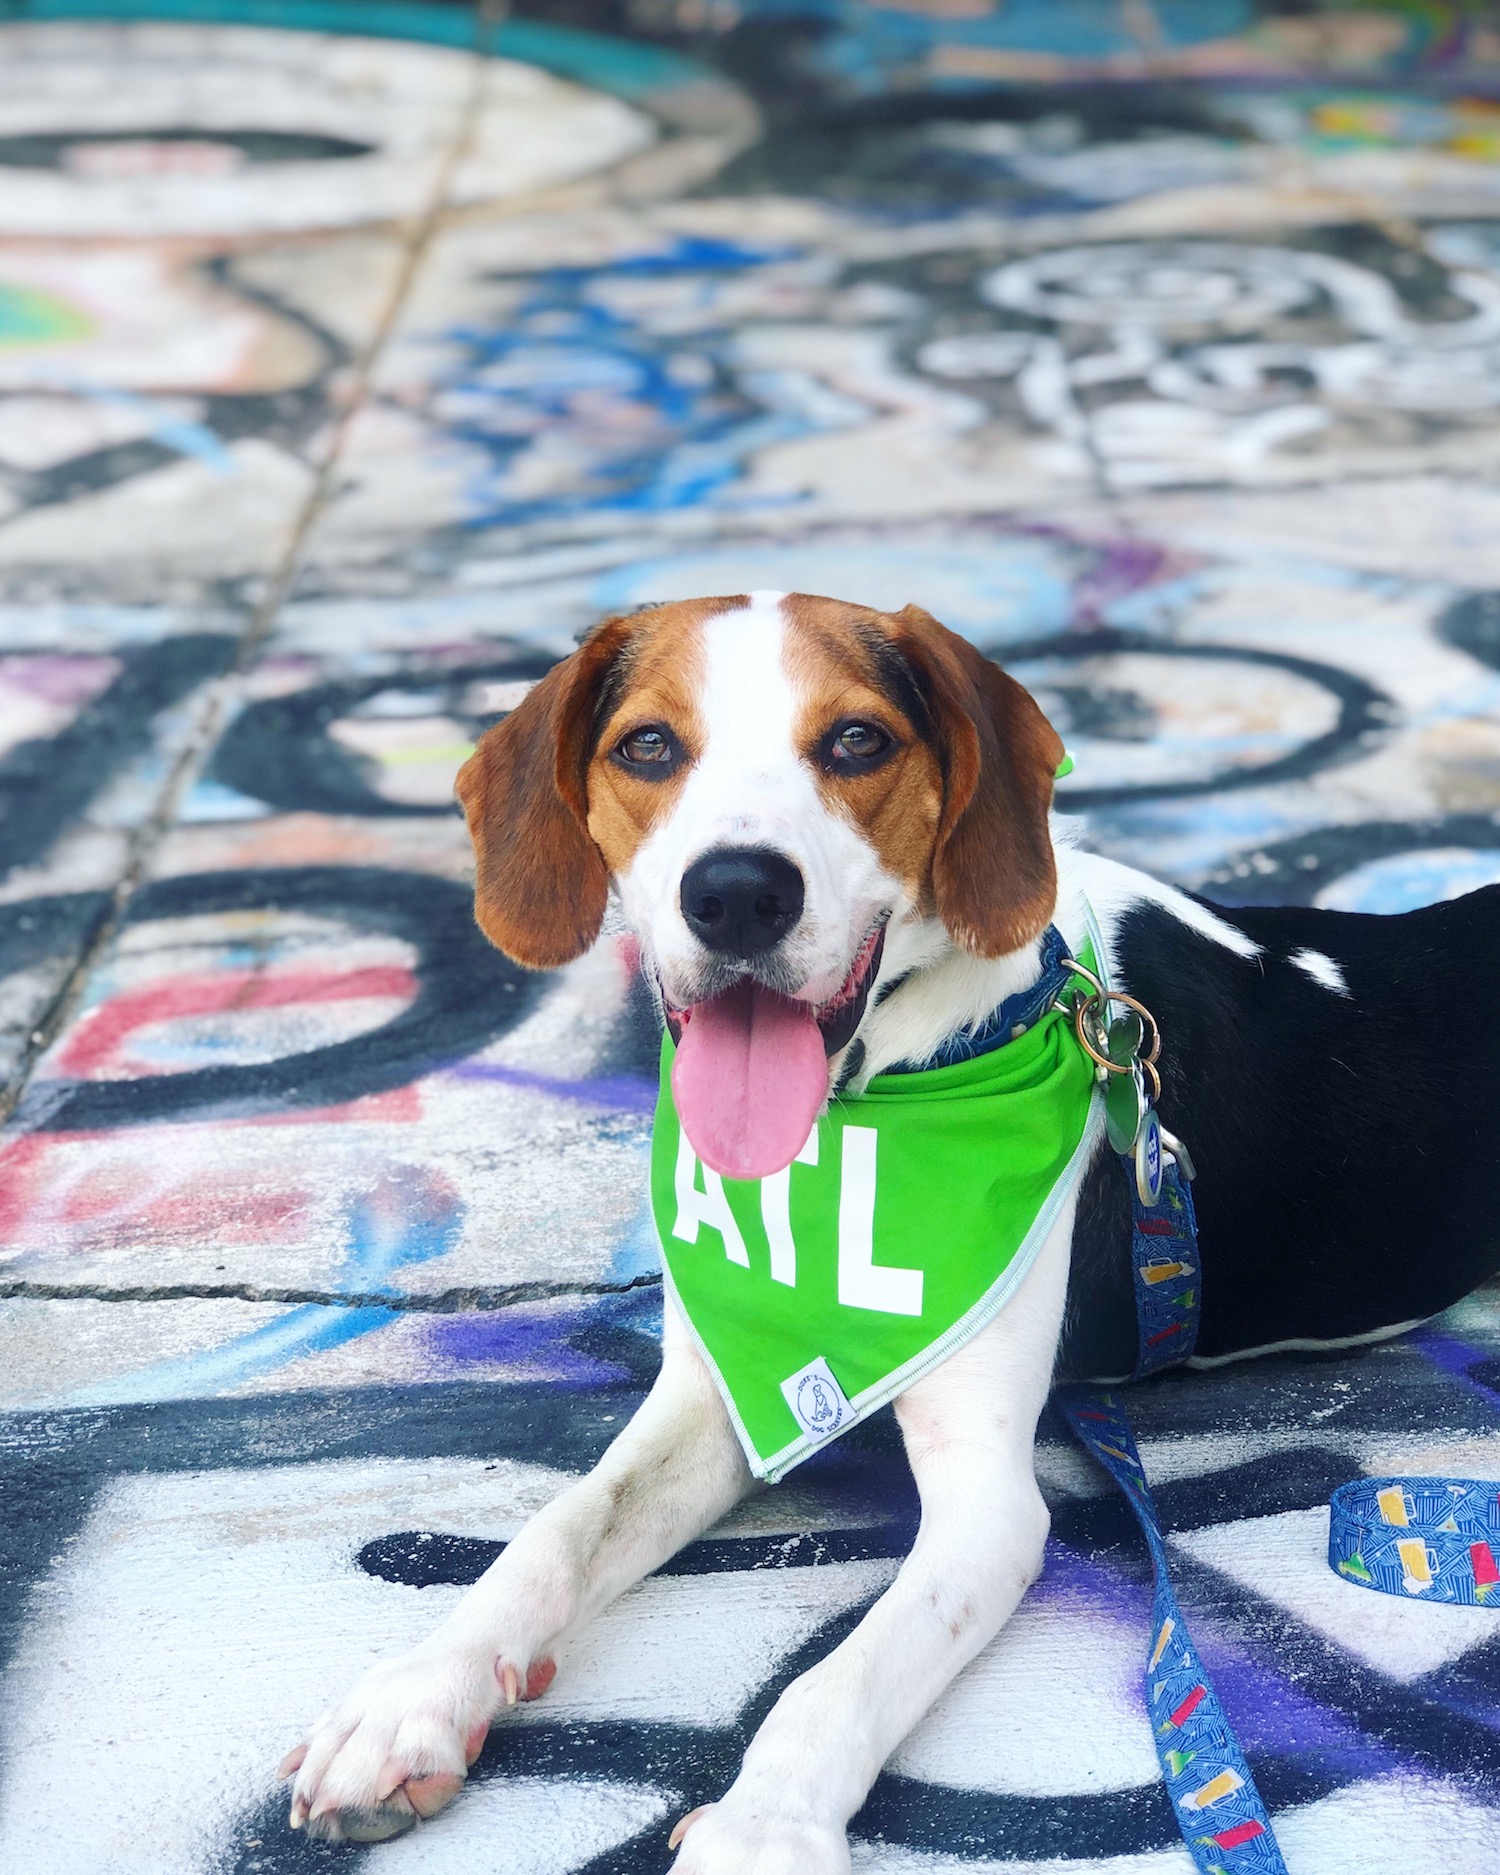 The same beagle pictured above wearing an ATL bandana. 